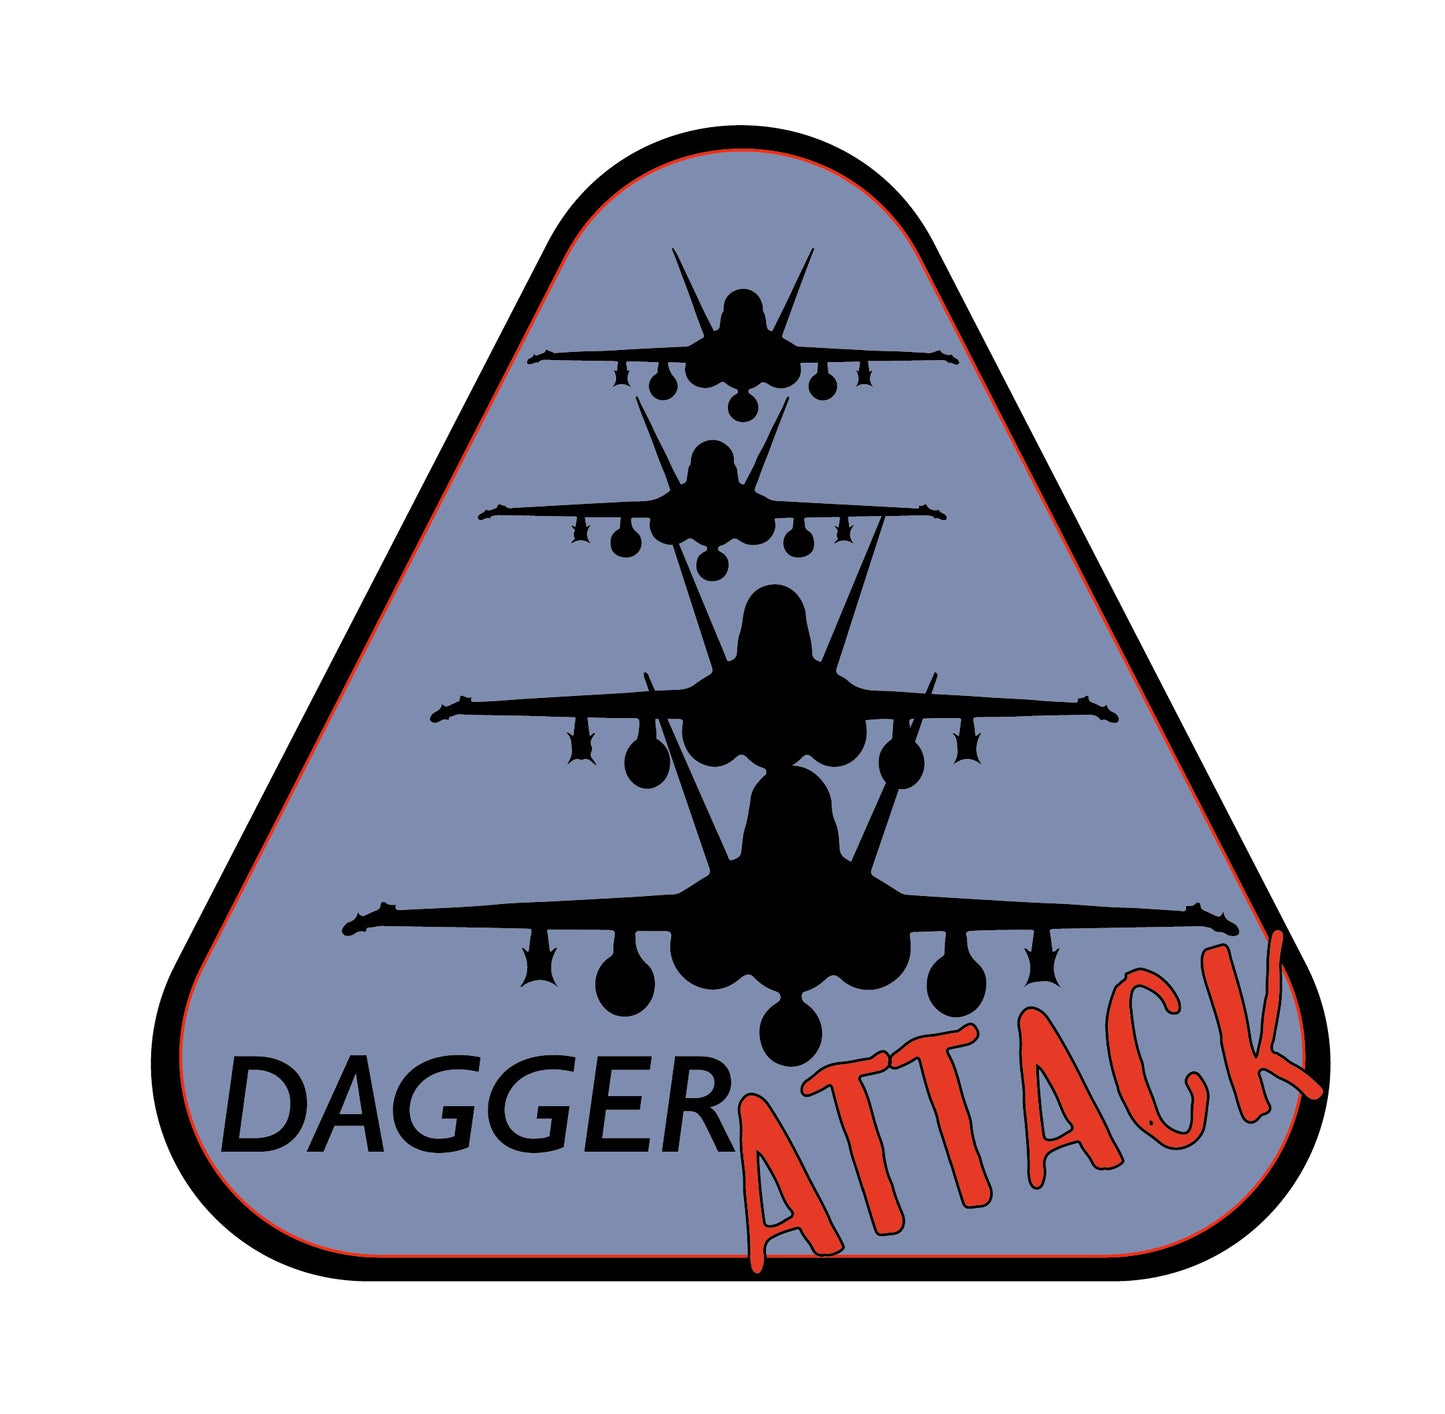 F/A-18 Super Hornet “Dagger Attack” Sticker